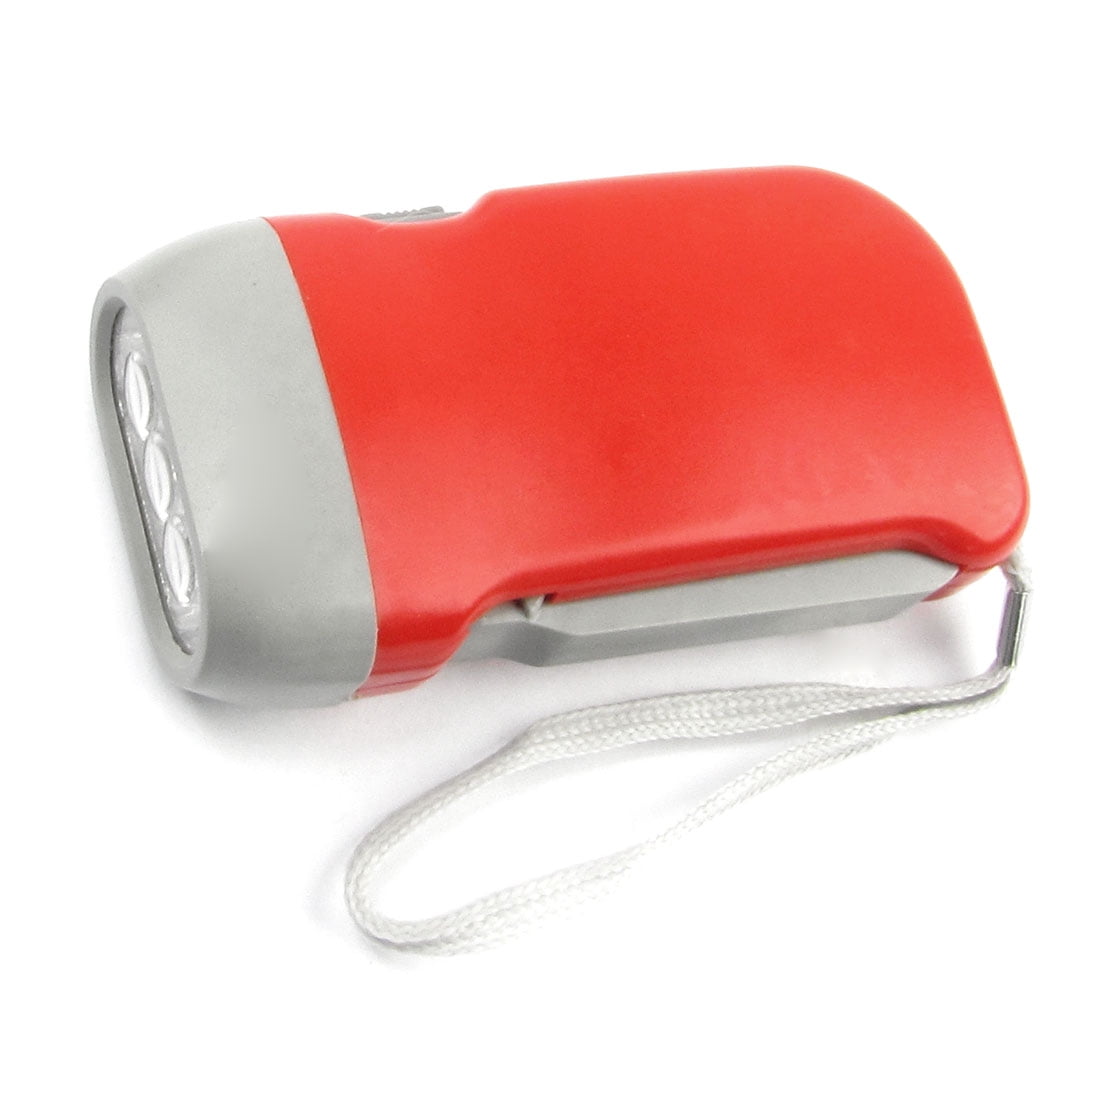 Portable Home Red Plastic LED Torch Light Flashlight 3.9 Length